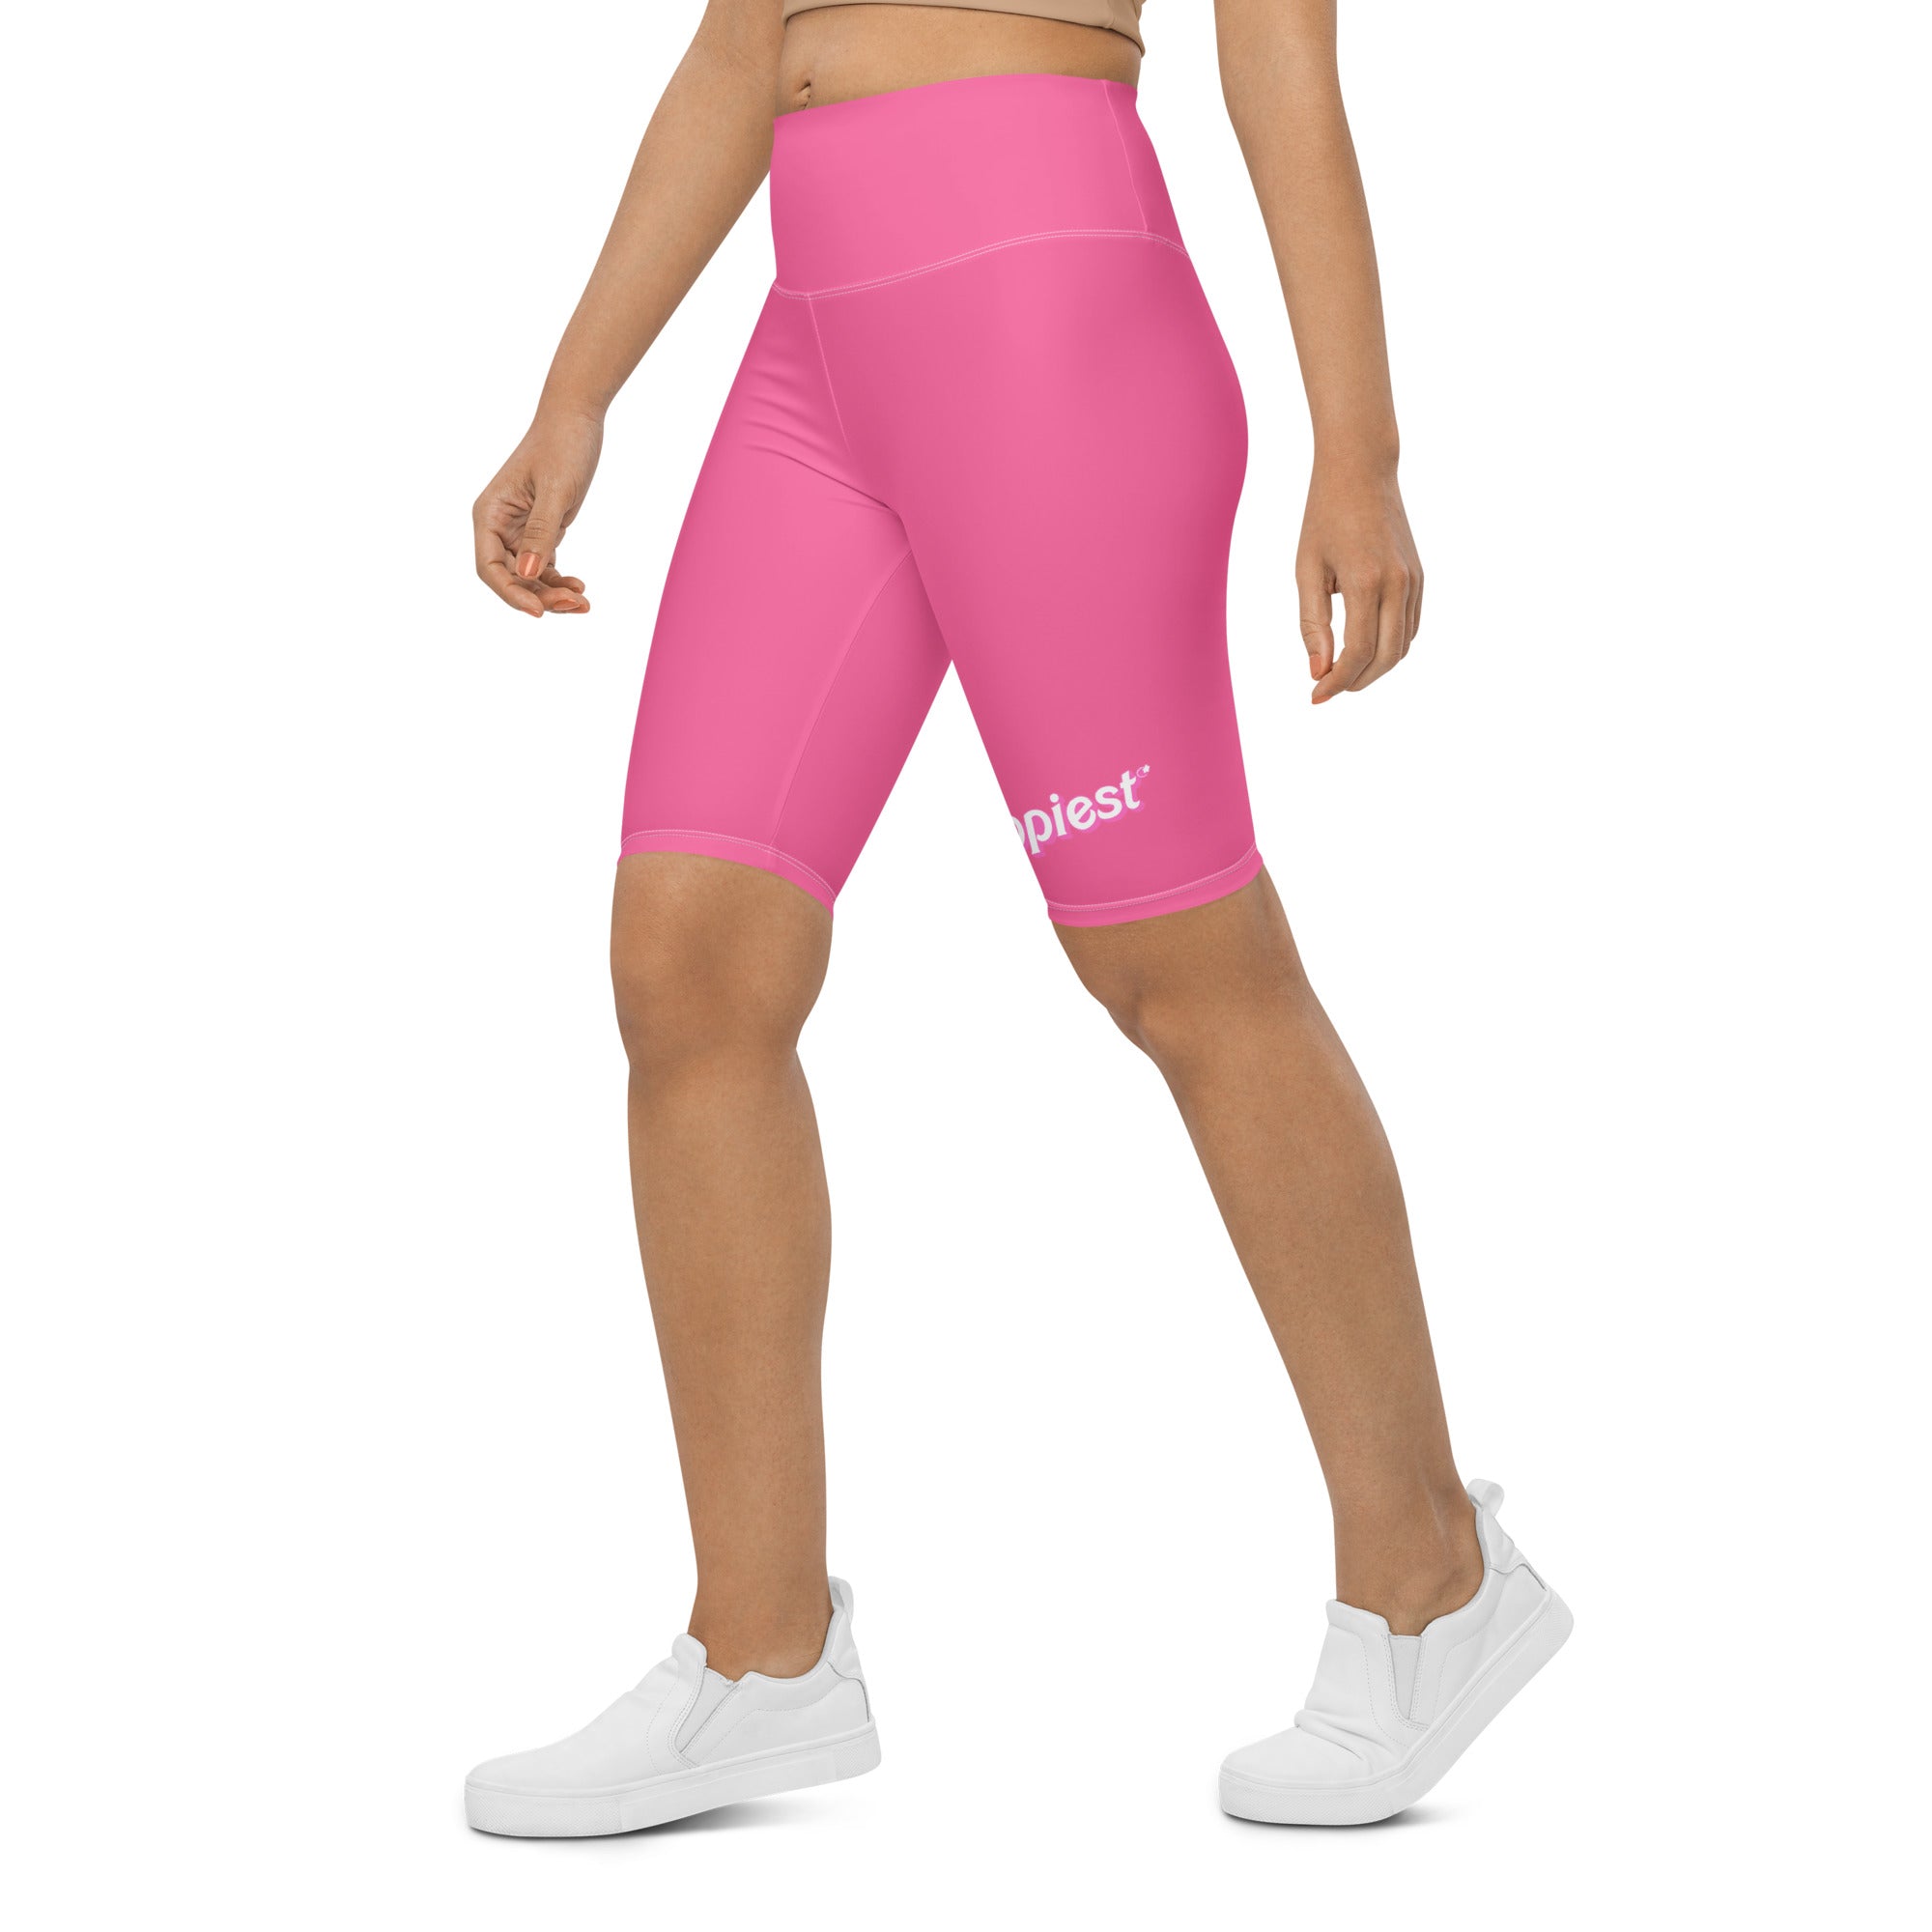 Barbie Biker Shorts